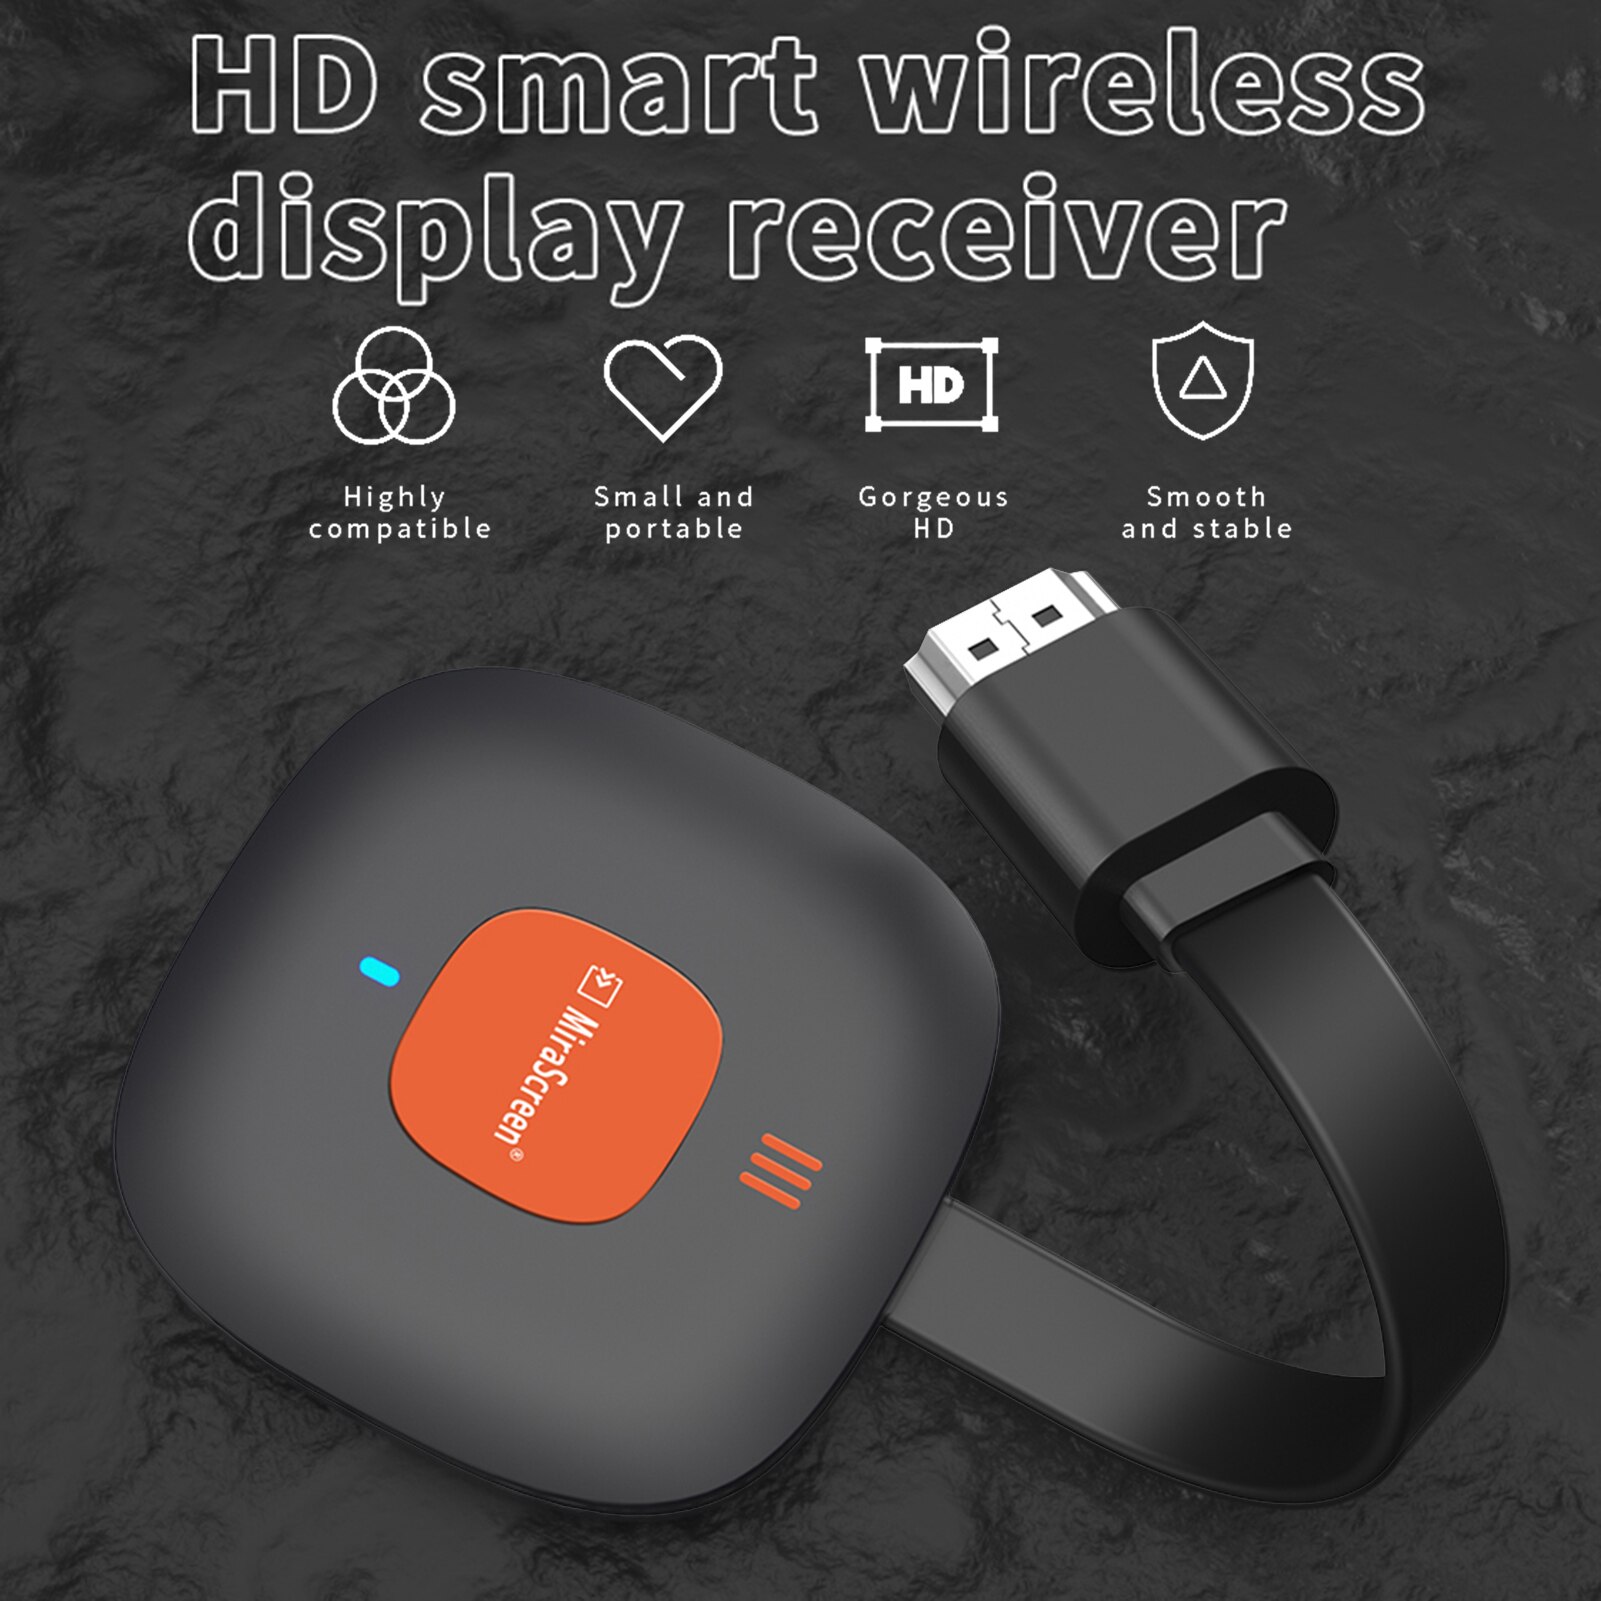 Wireless Display Dongle Draagbare Hdmi-Compatialble Display Ontvanger 2.4G Draadloze Wifi Intelligente Projector Voor Iphone/Ipad/pc